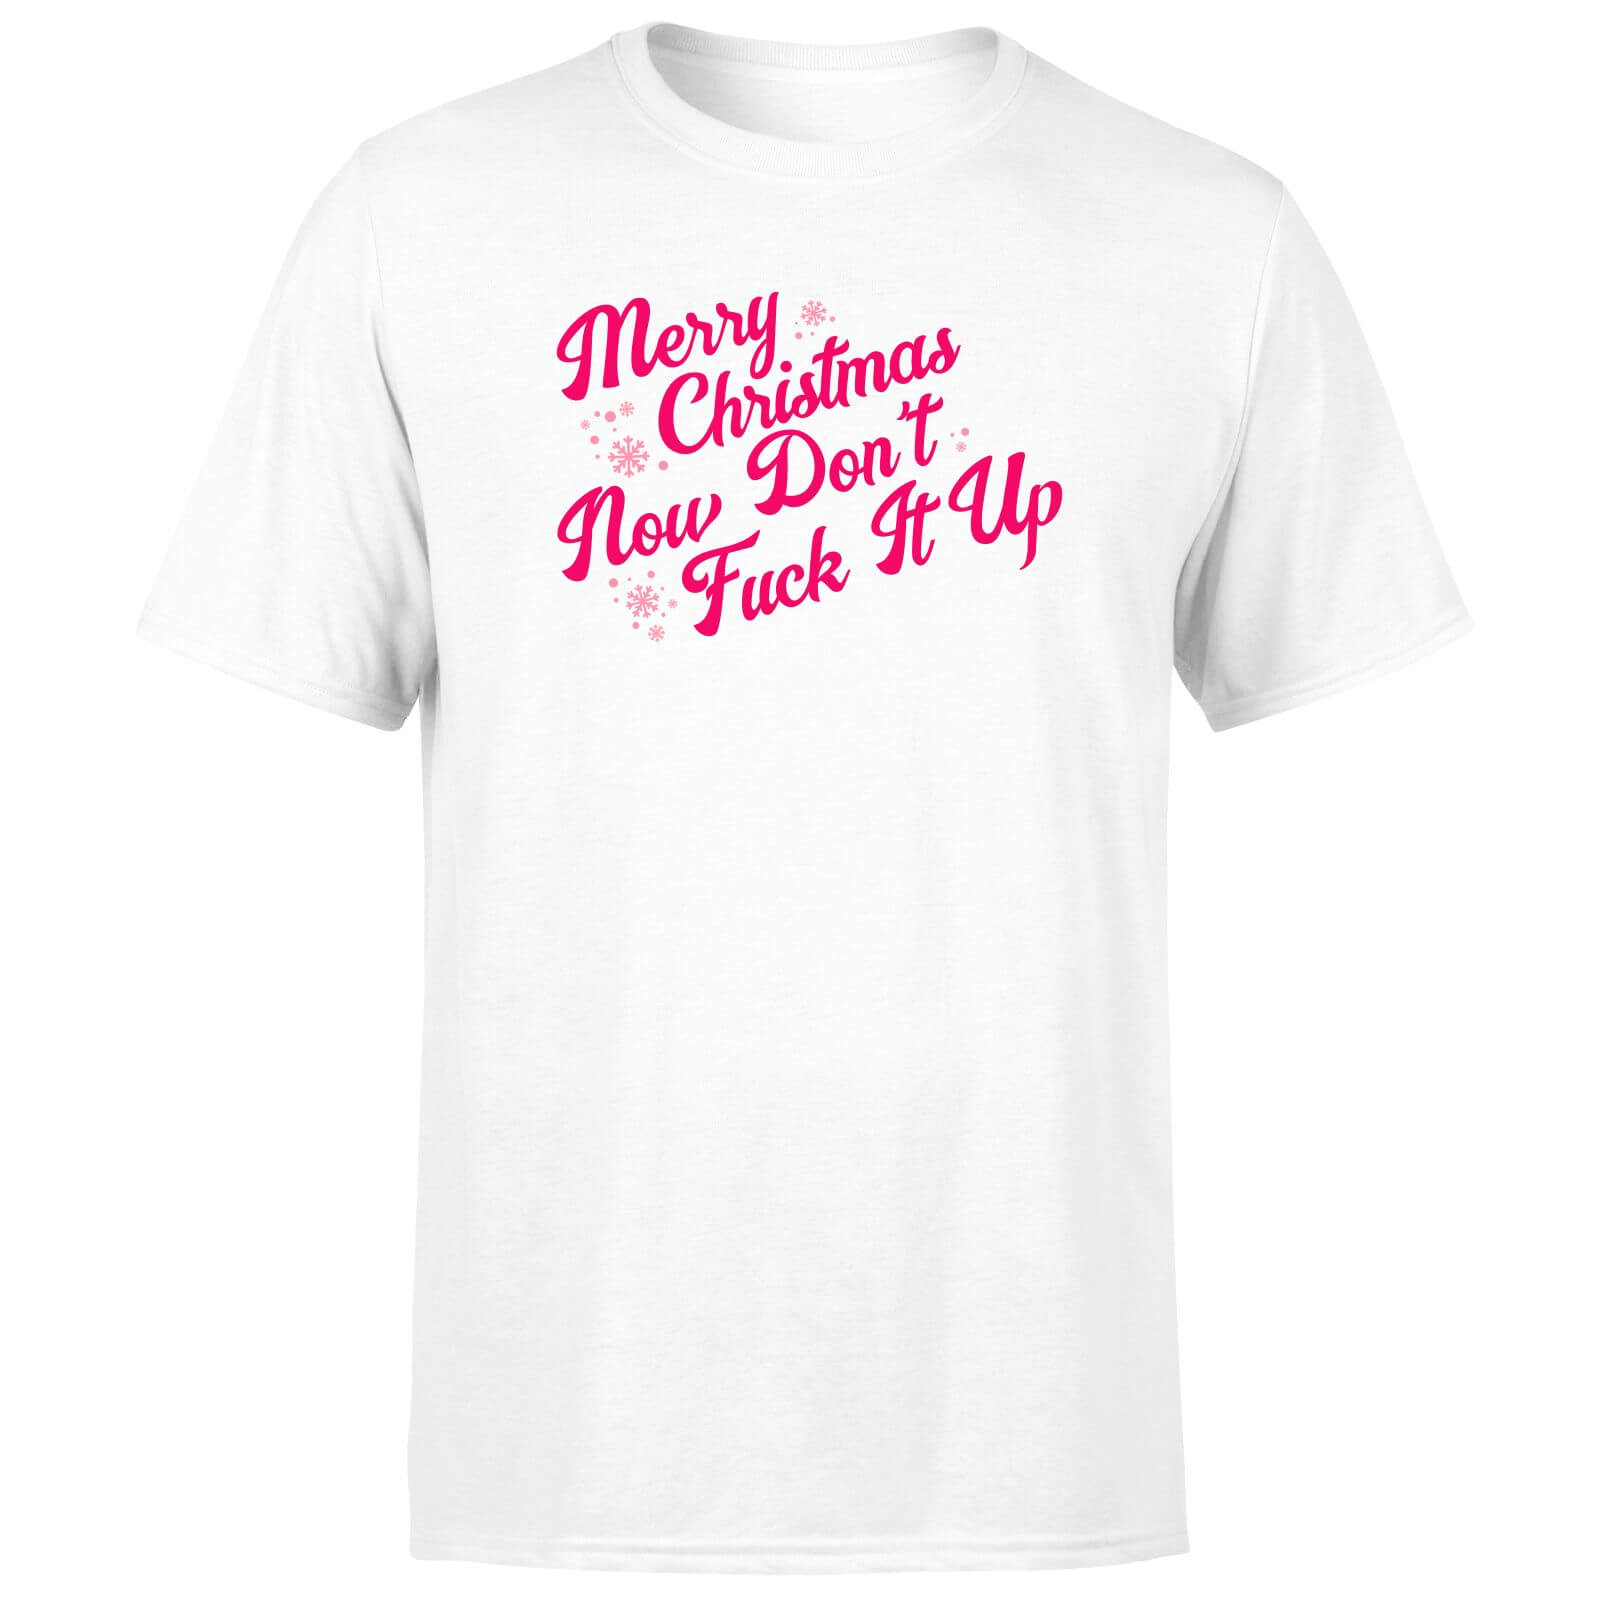 Merry Drag Snowy Christmas Now Don't Fuck It Up Men's T-Shirt - White - XS - White